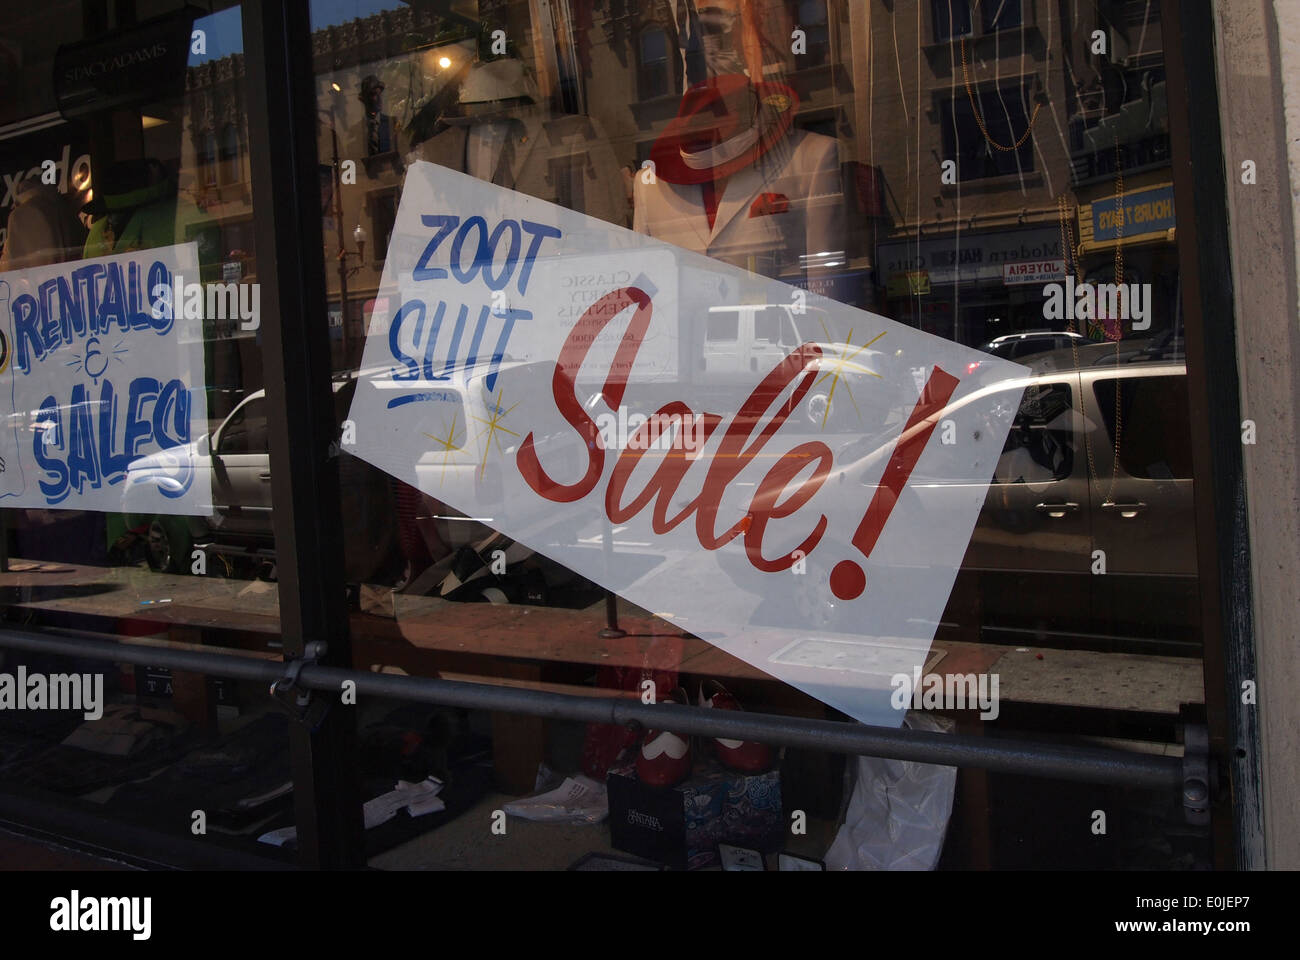 Zoot suit vendita sign store window Mission Street di San Francisco in California Foto Stock